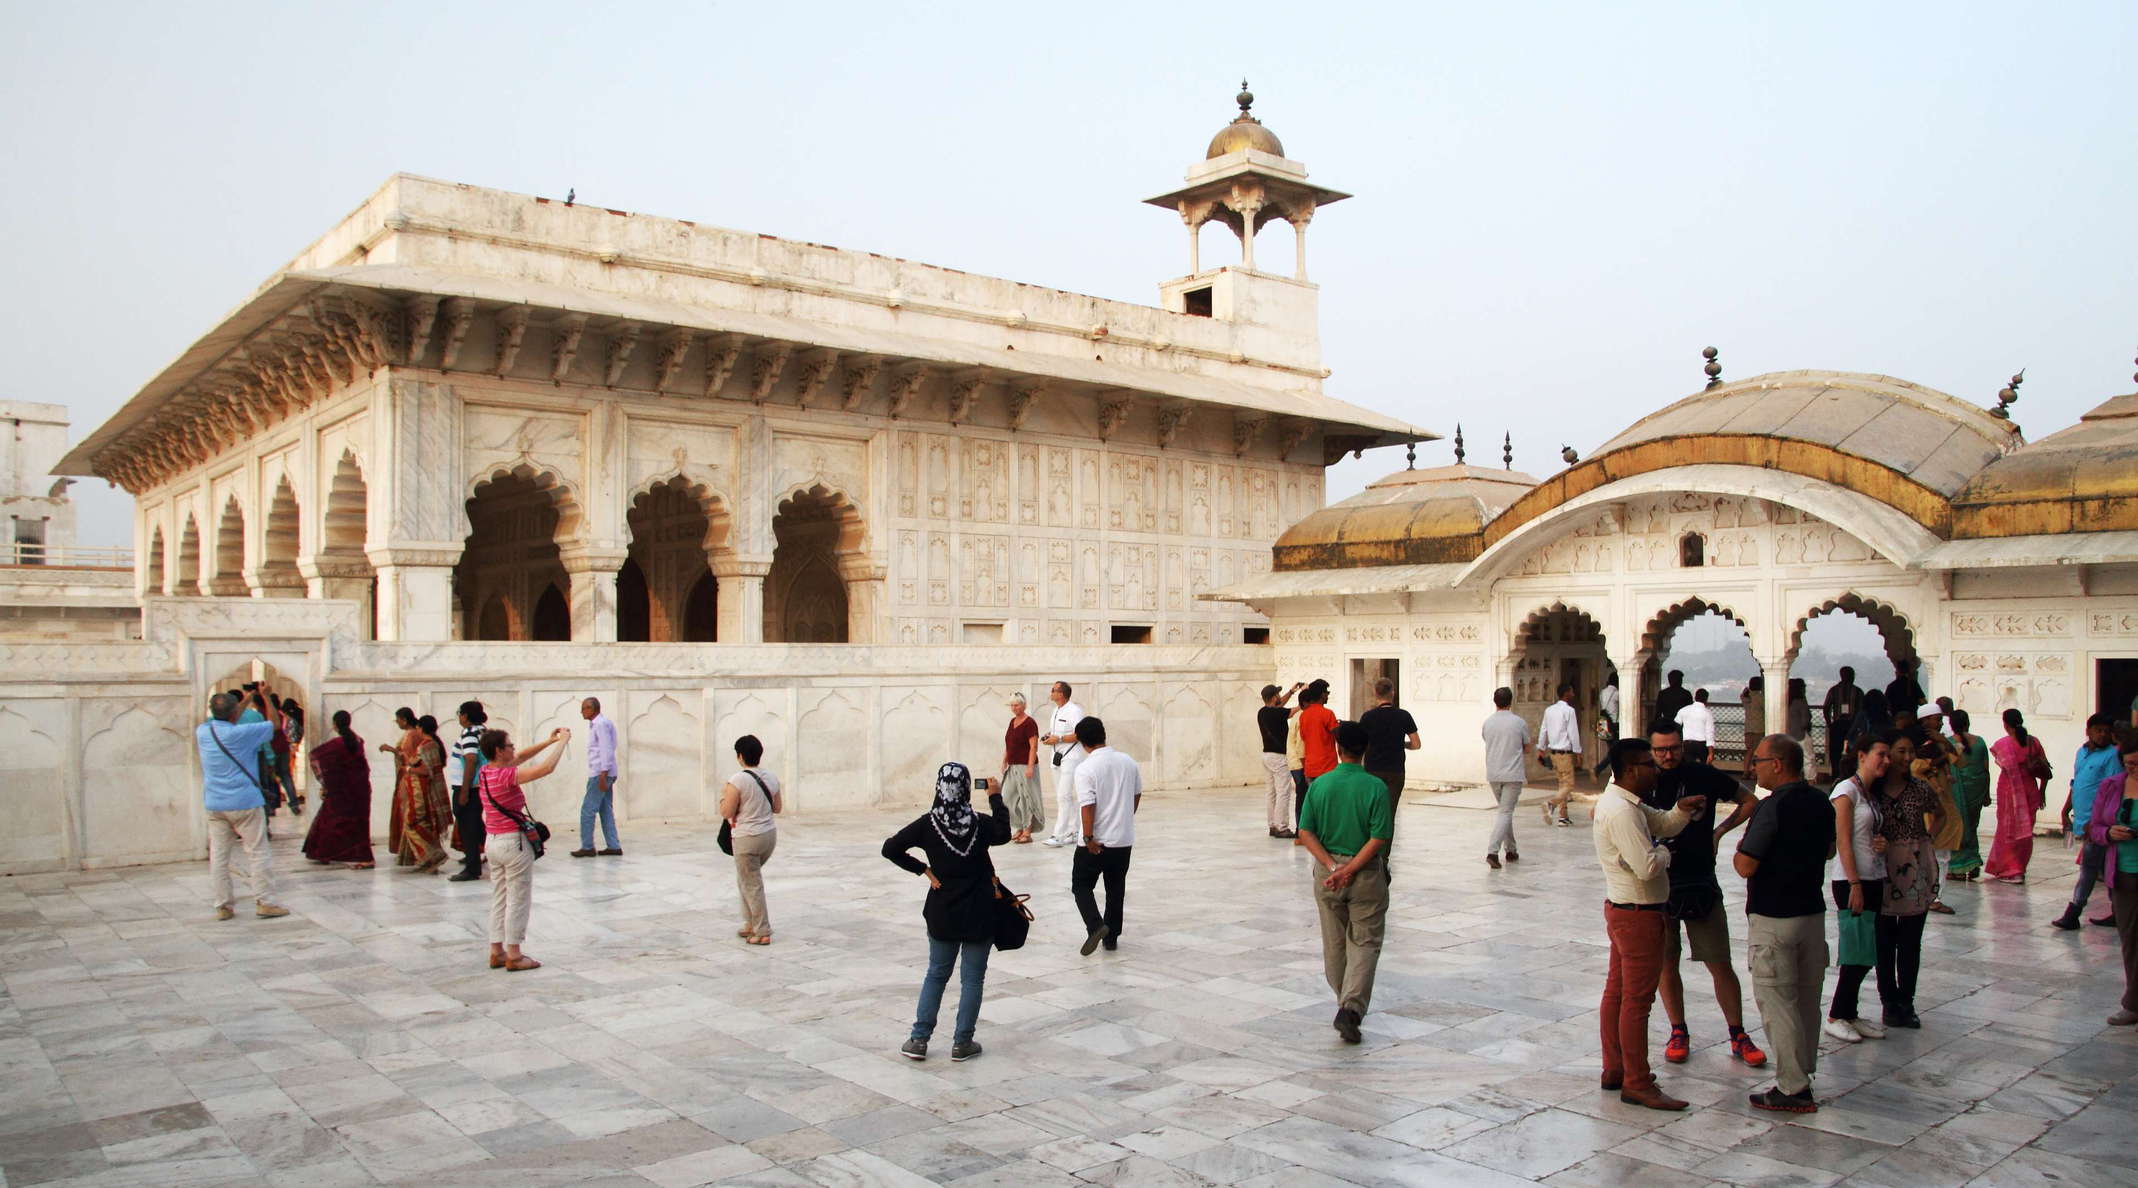 Agra Fort  |  Khas Mahal